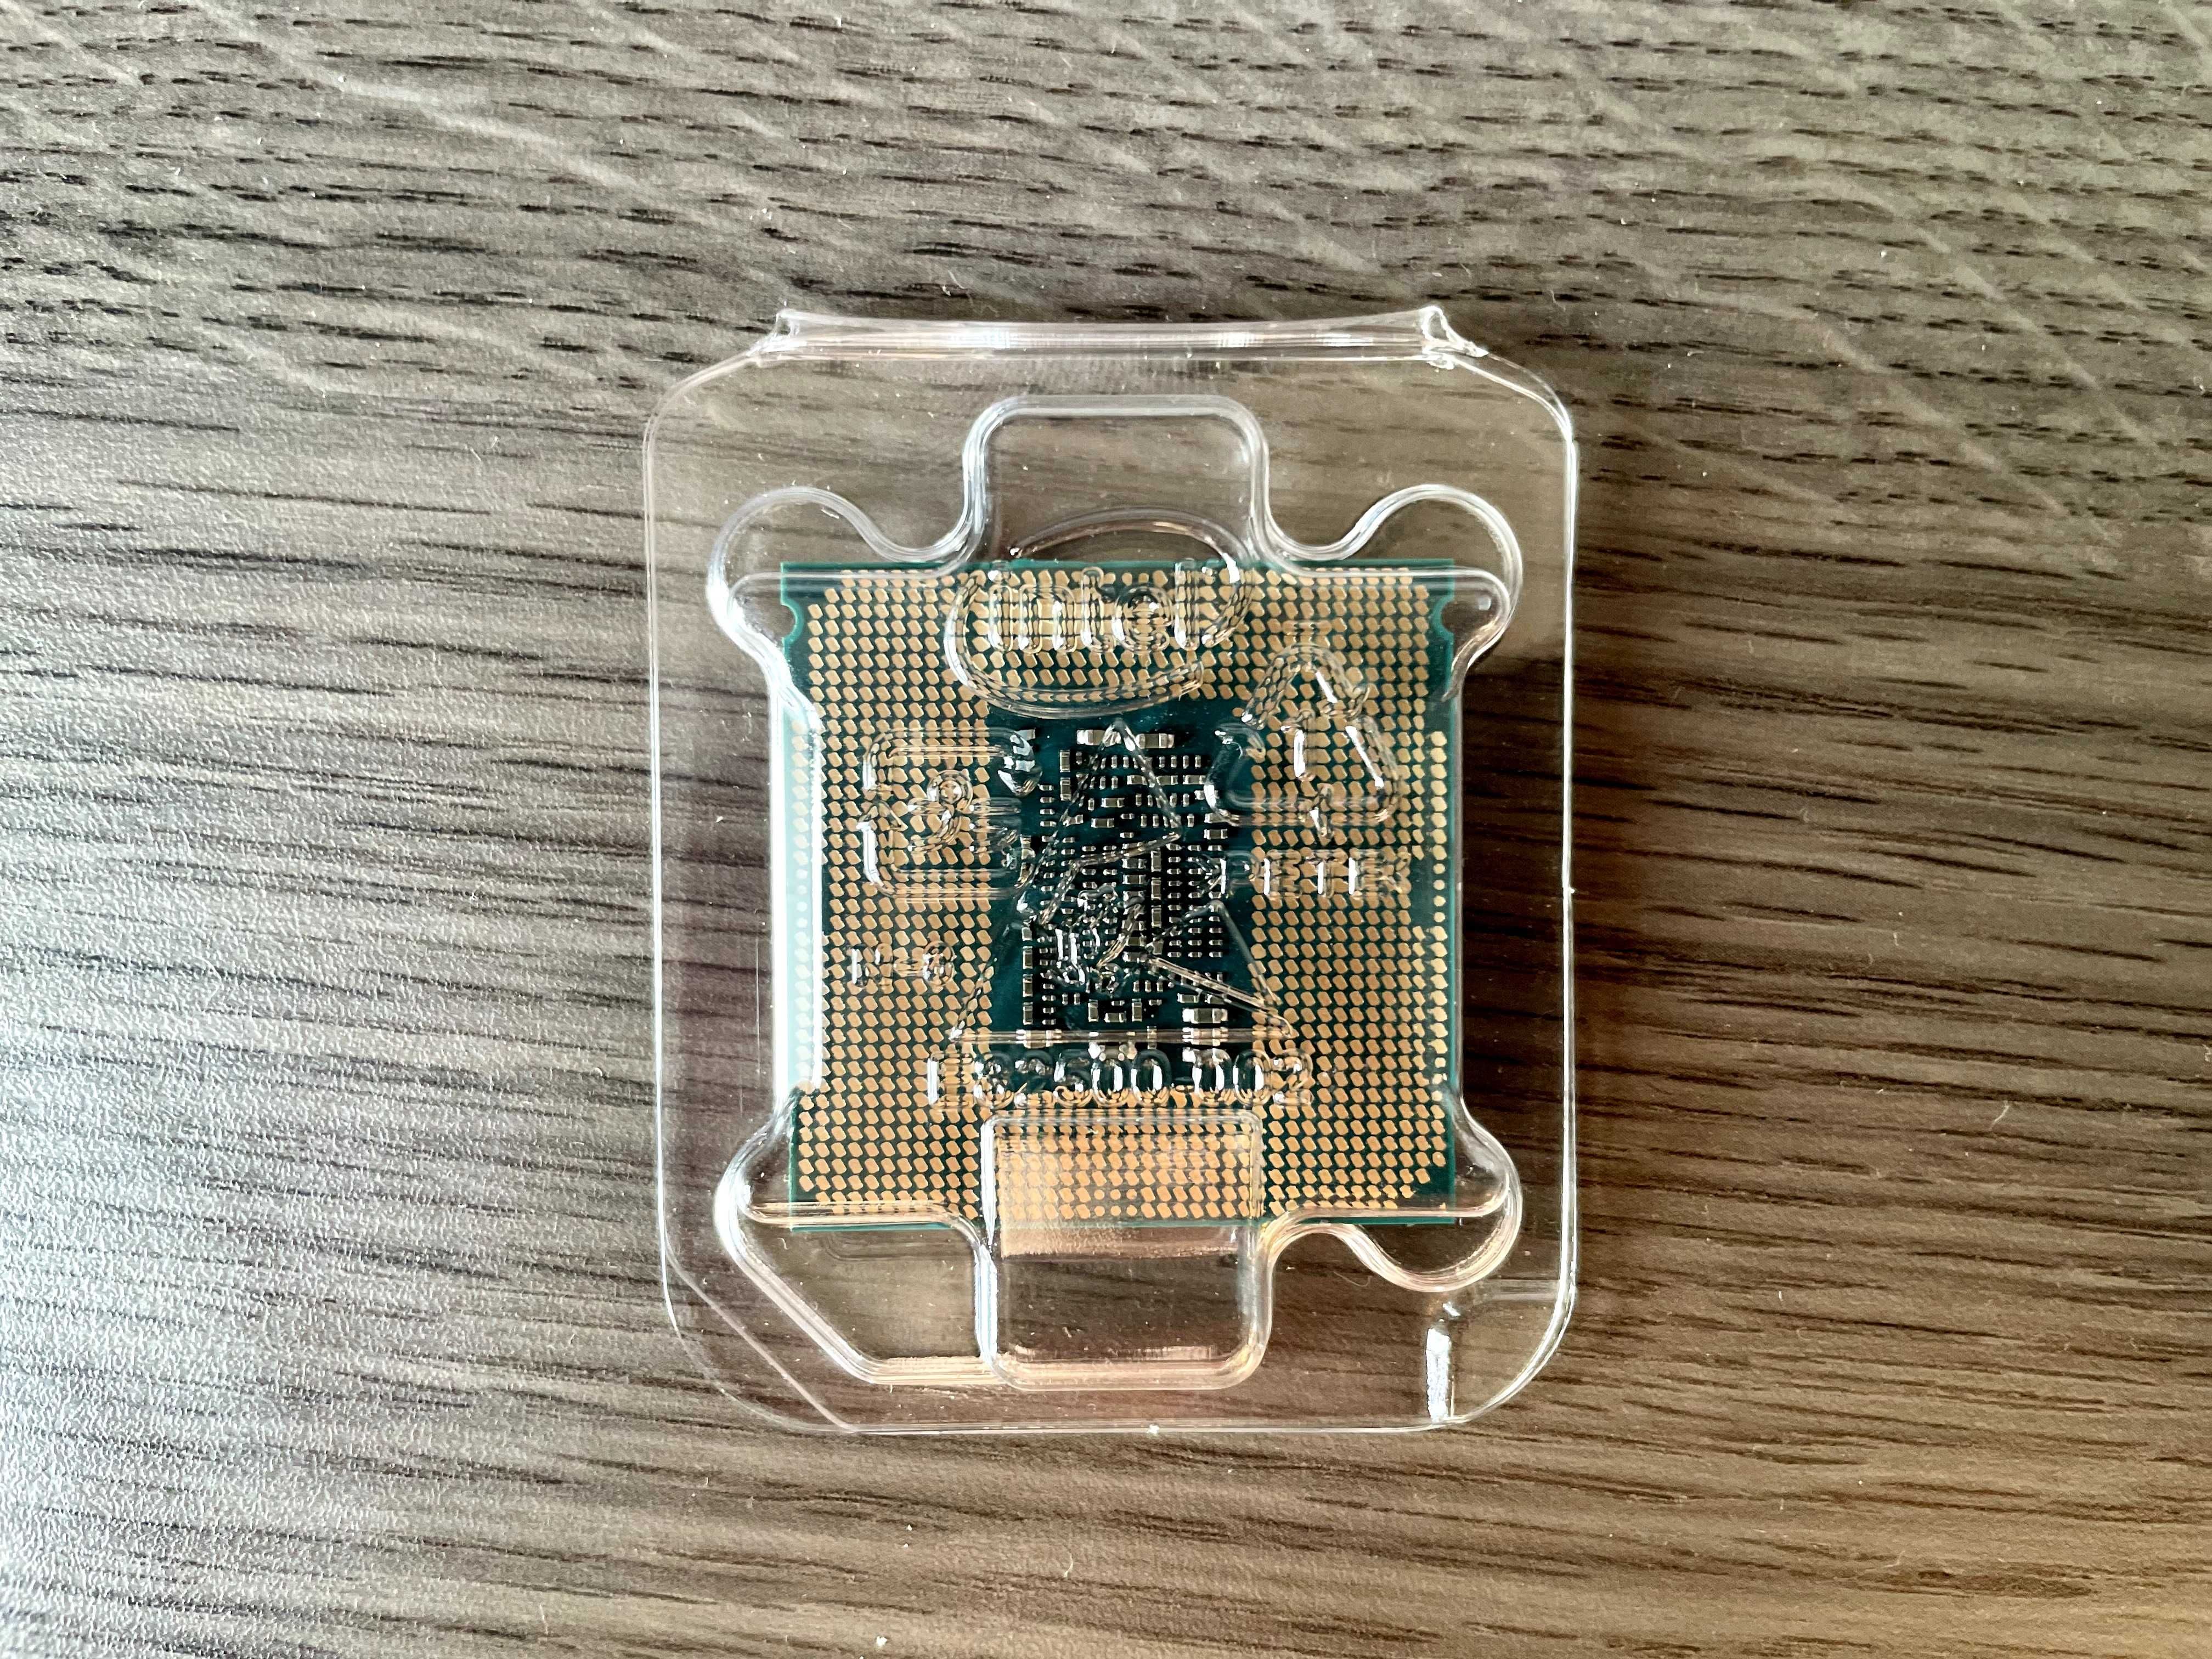 Процесор Intel Pentium G5600F 3.9GHz/8GT/s/4MB s1151 BOX